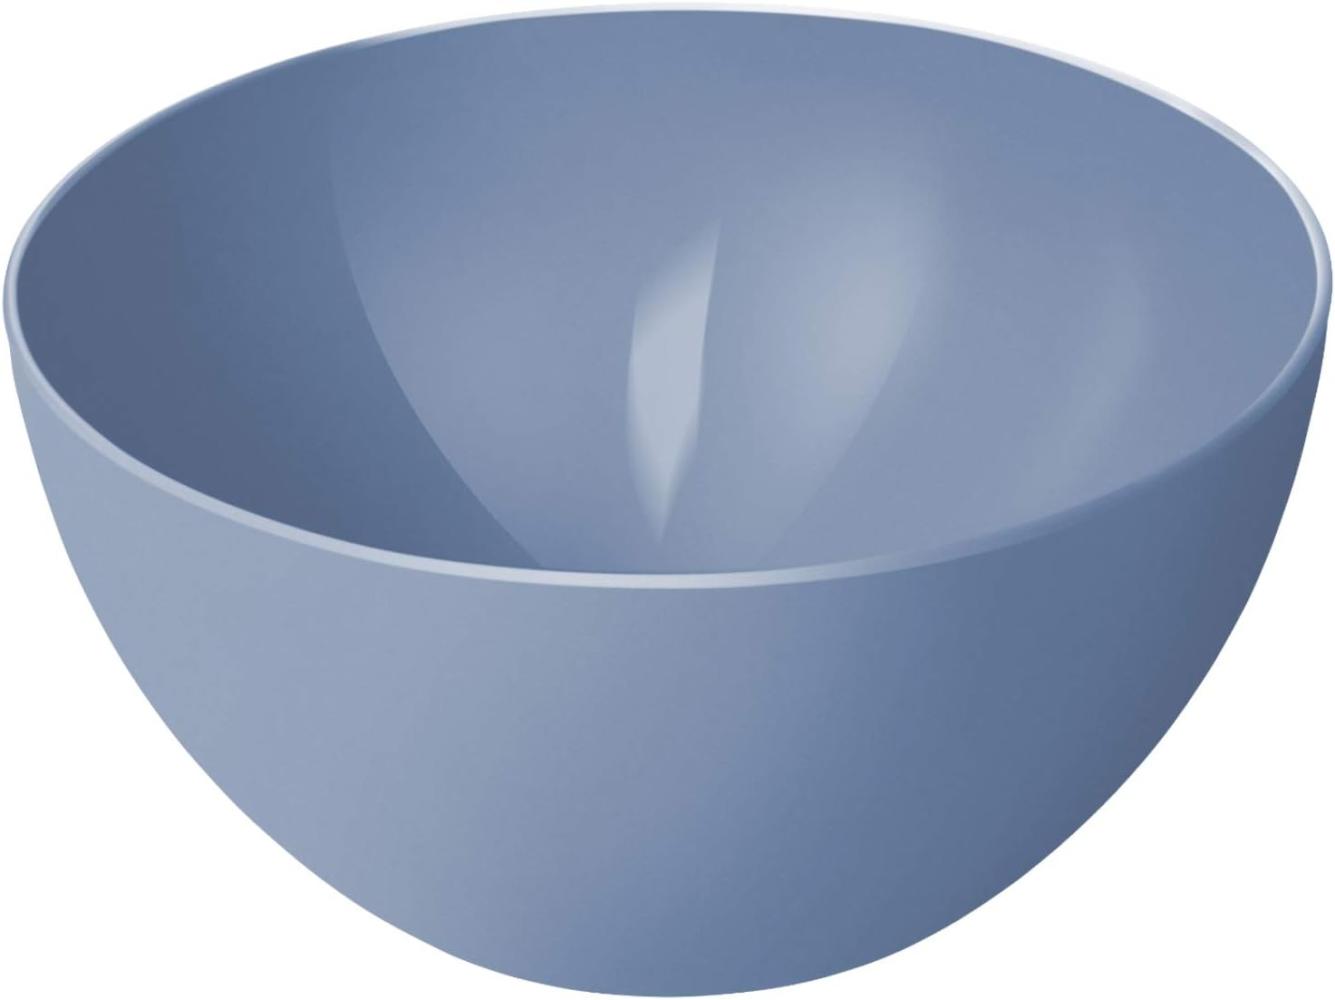 Rotho Caruba kleine Schüssel 3l, Kunststoff (PP) BPA-frei, blau, 3l (22,5 x 22,5 x 11,0 cm) Bild 1